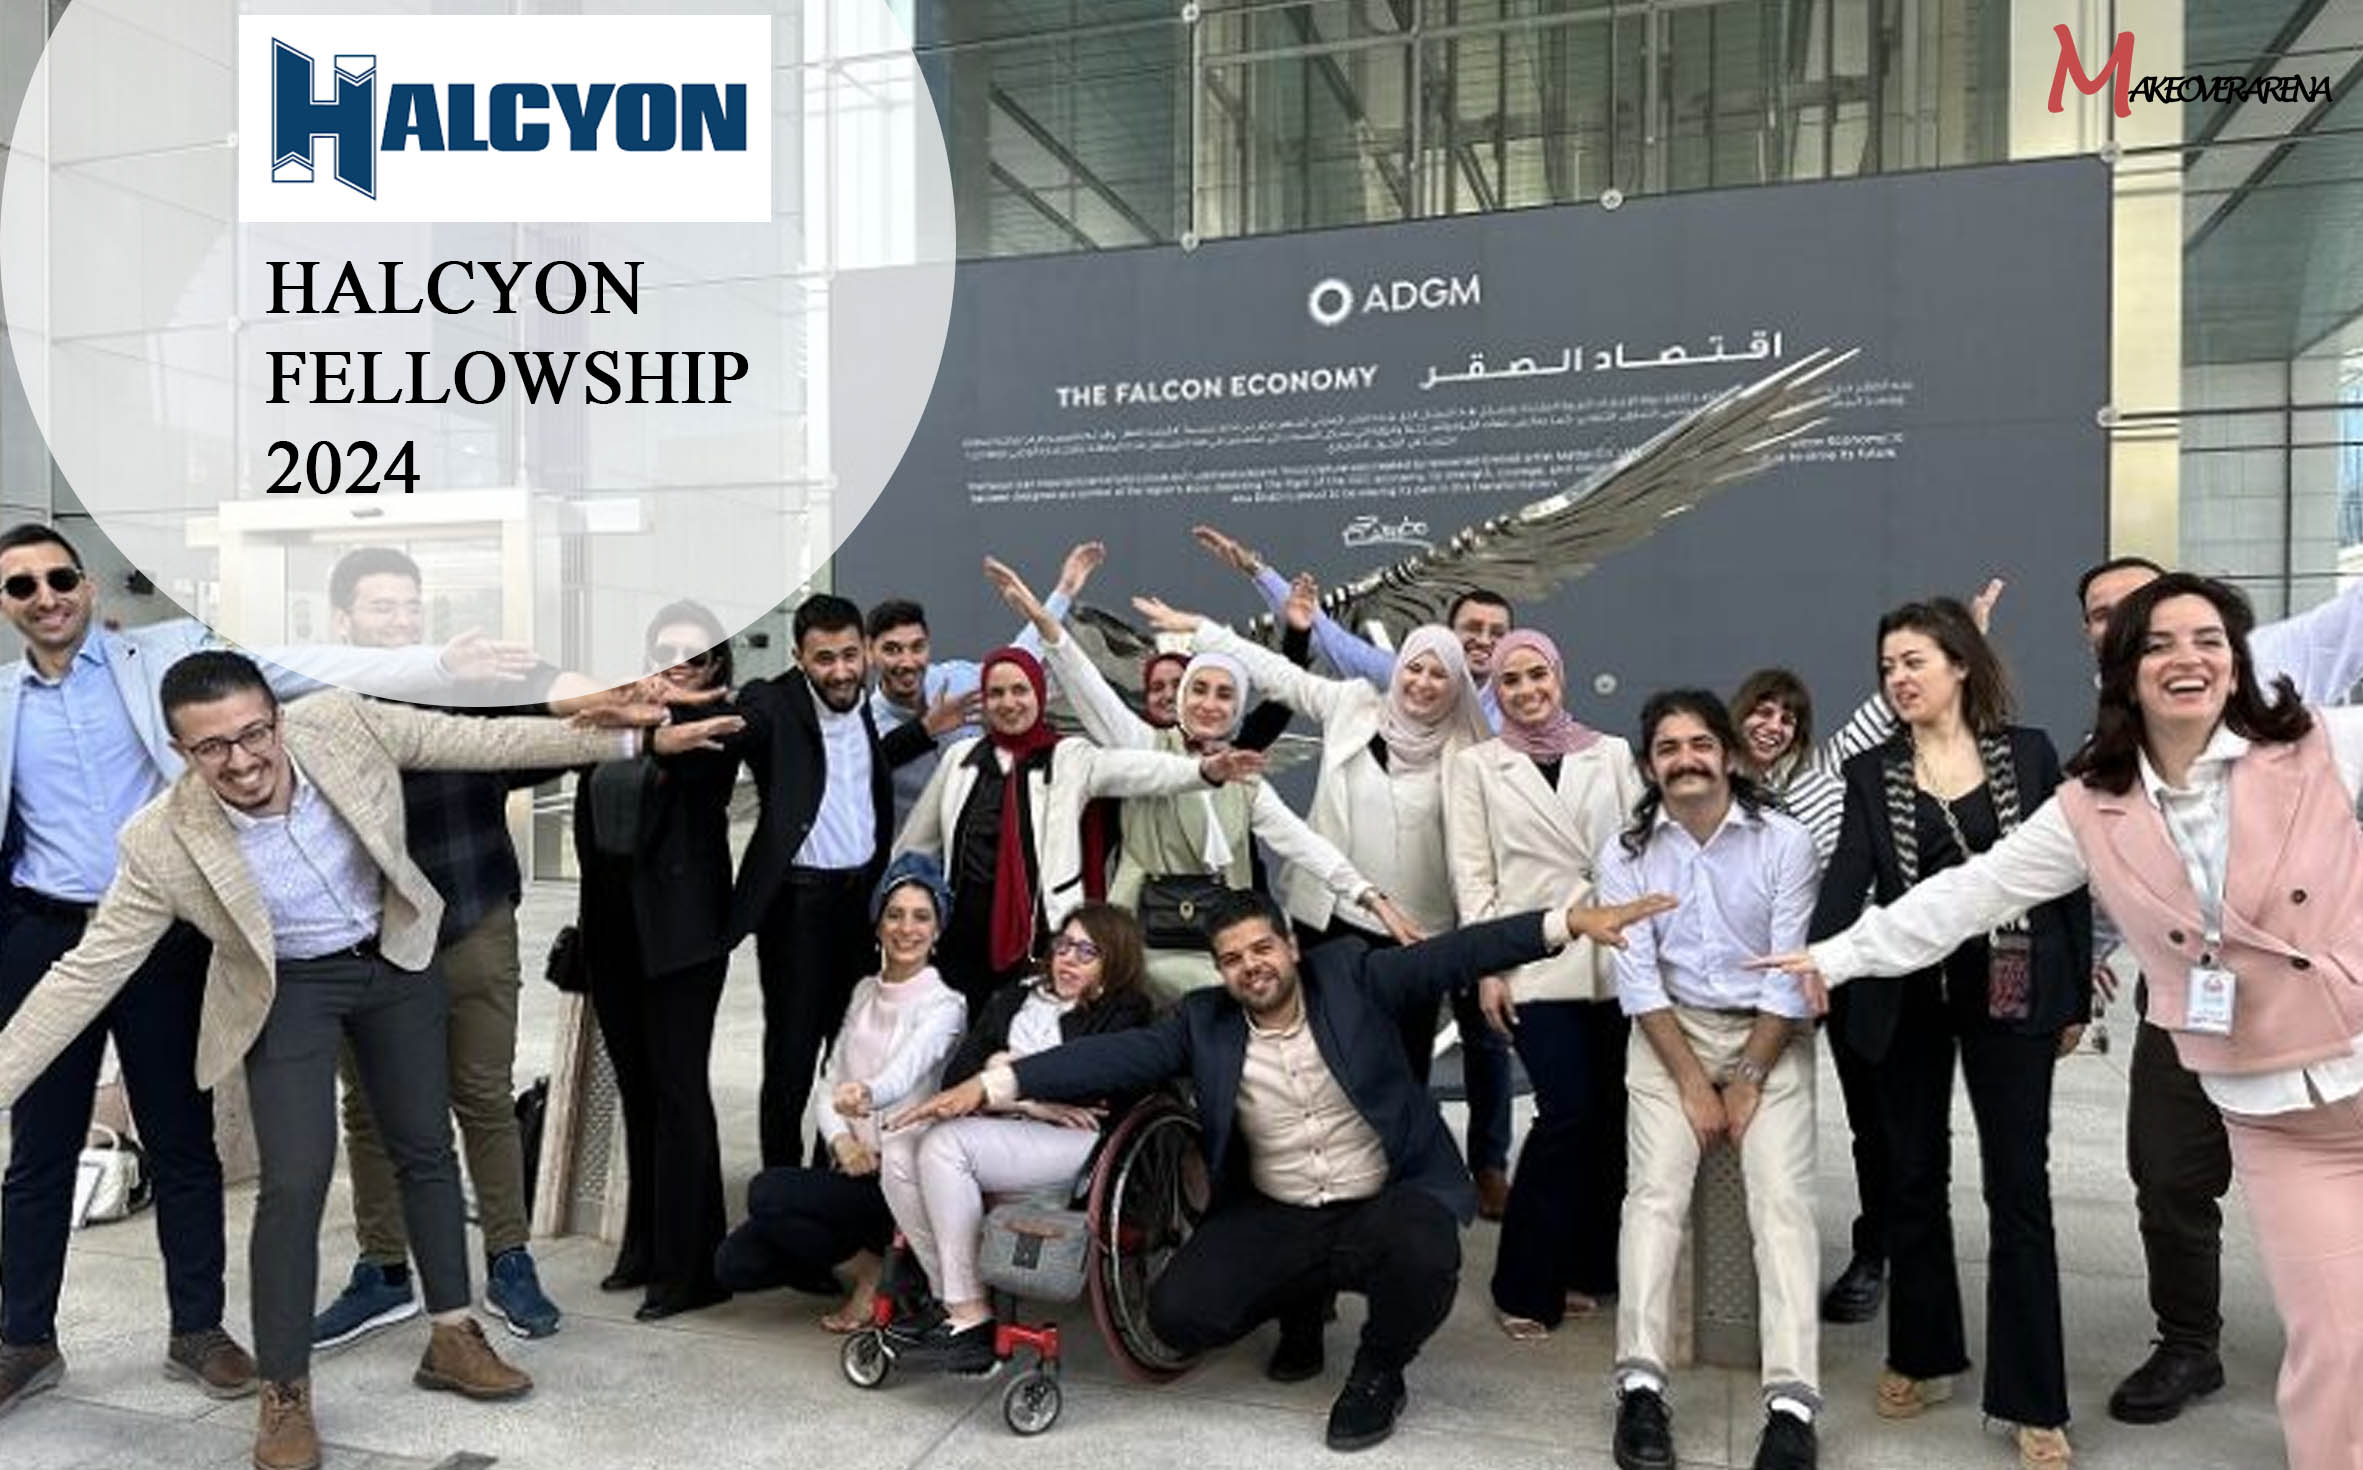 Halcyon Fellowship 2024 